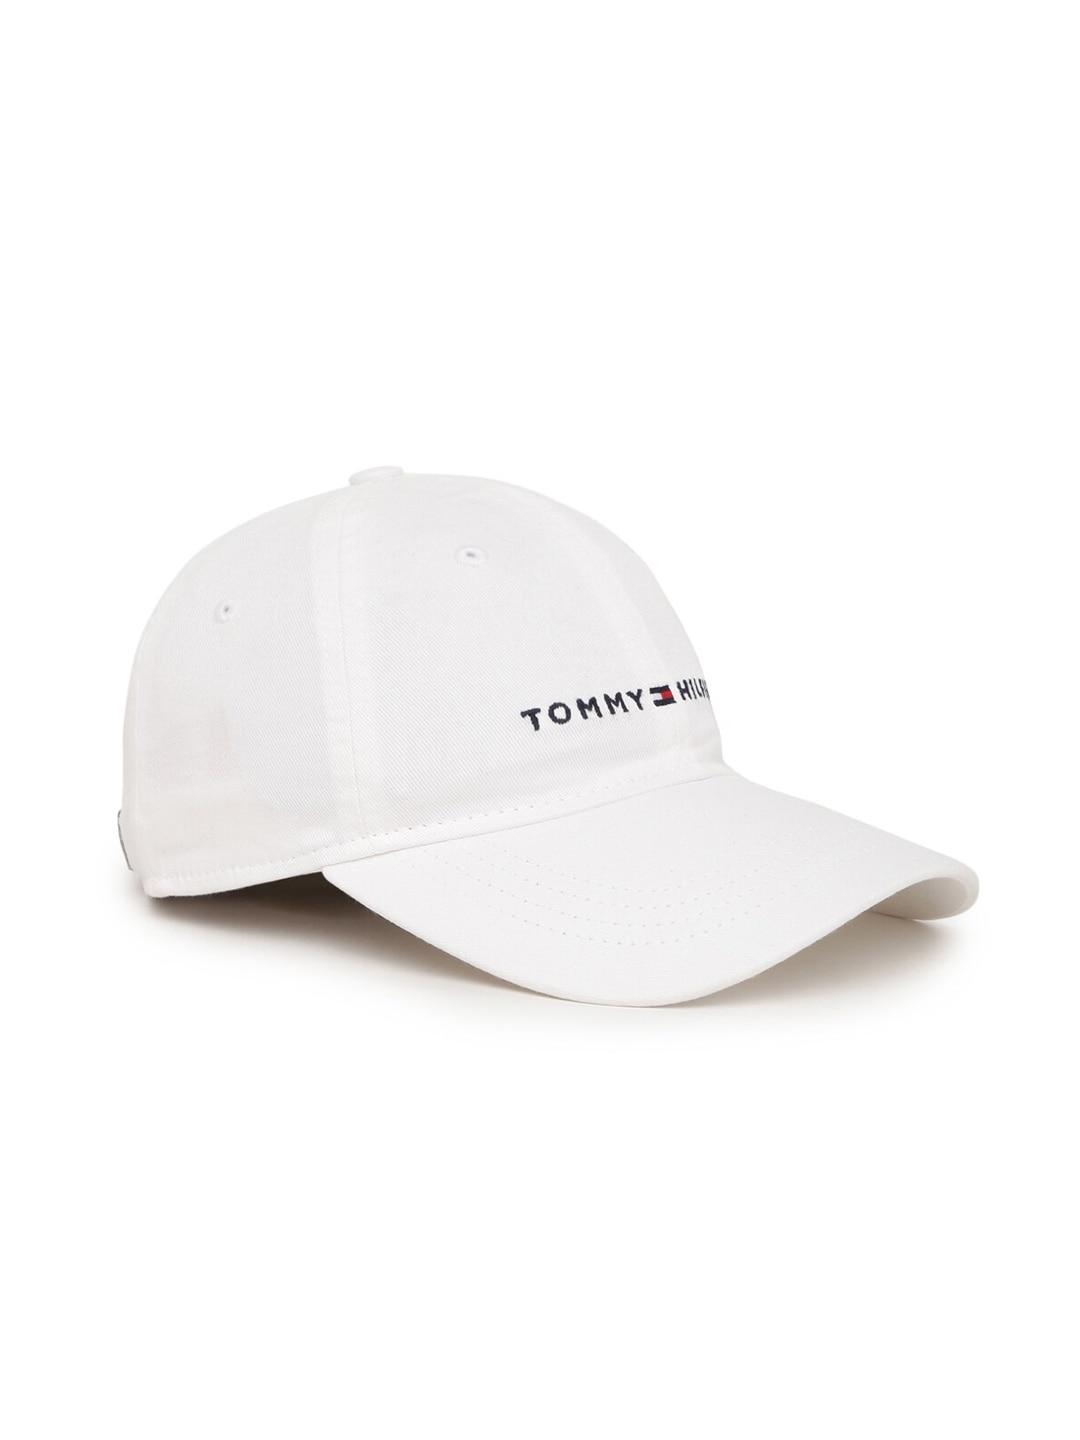 tommy-hilfiger-men-embroidered-cotton-baseball-cap